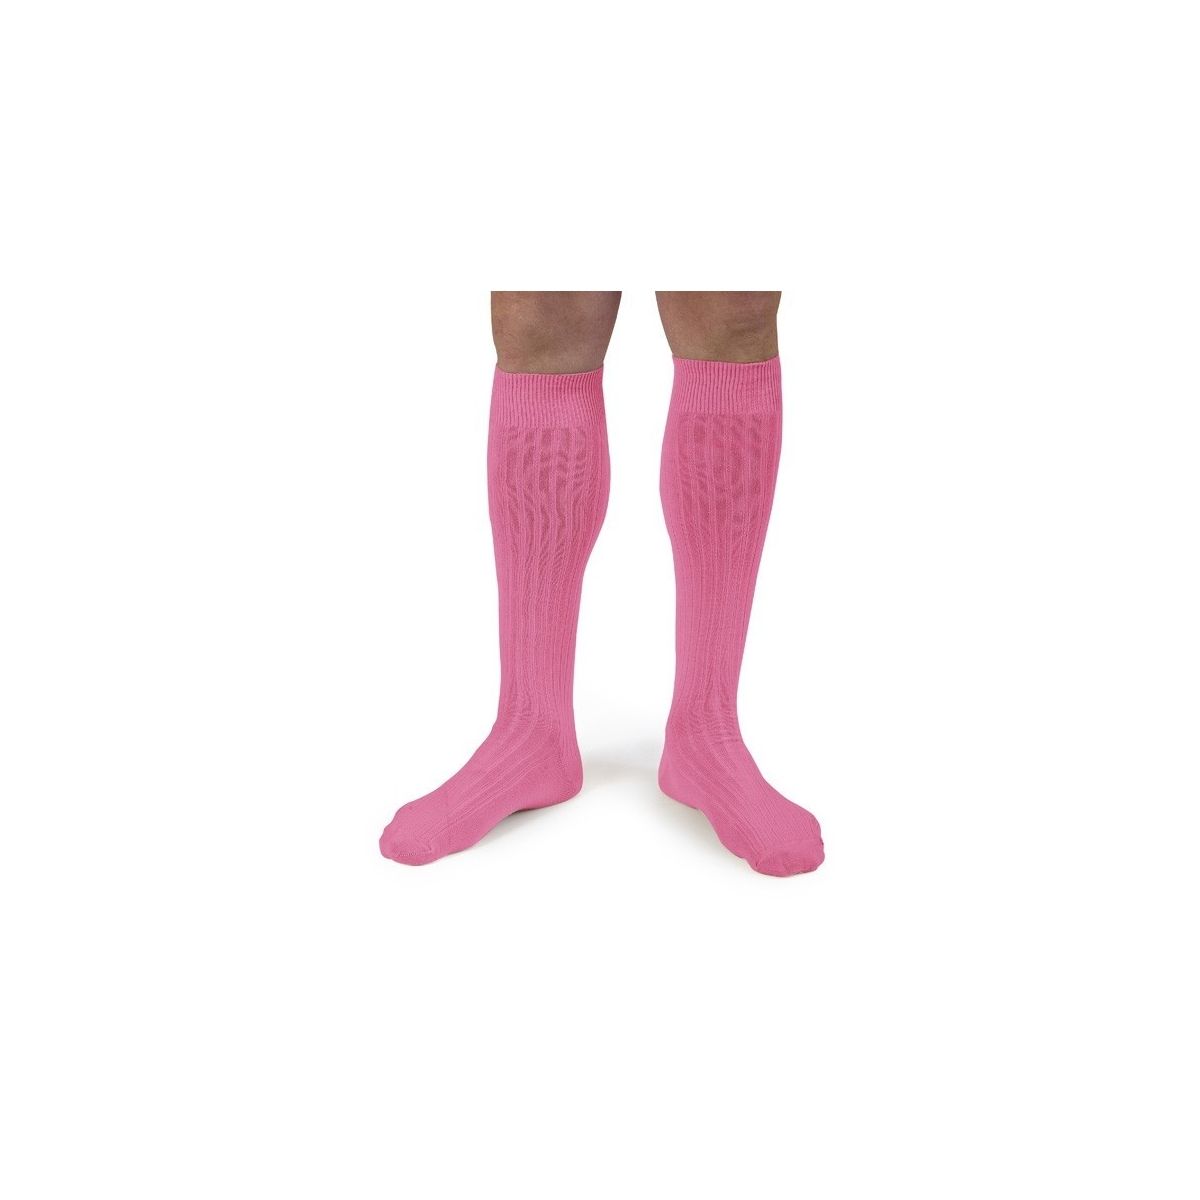 Collégien Knee high socks La Haute rose fluo